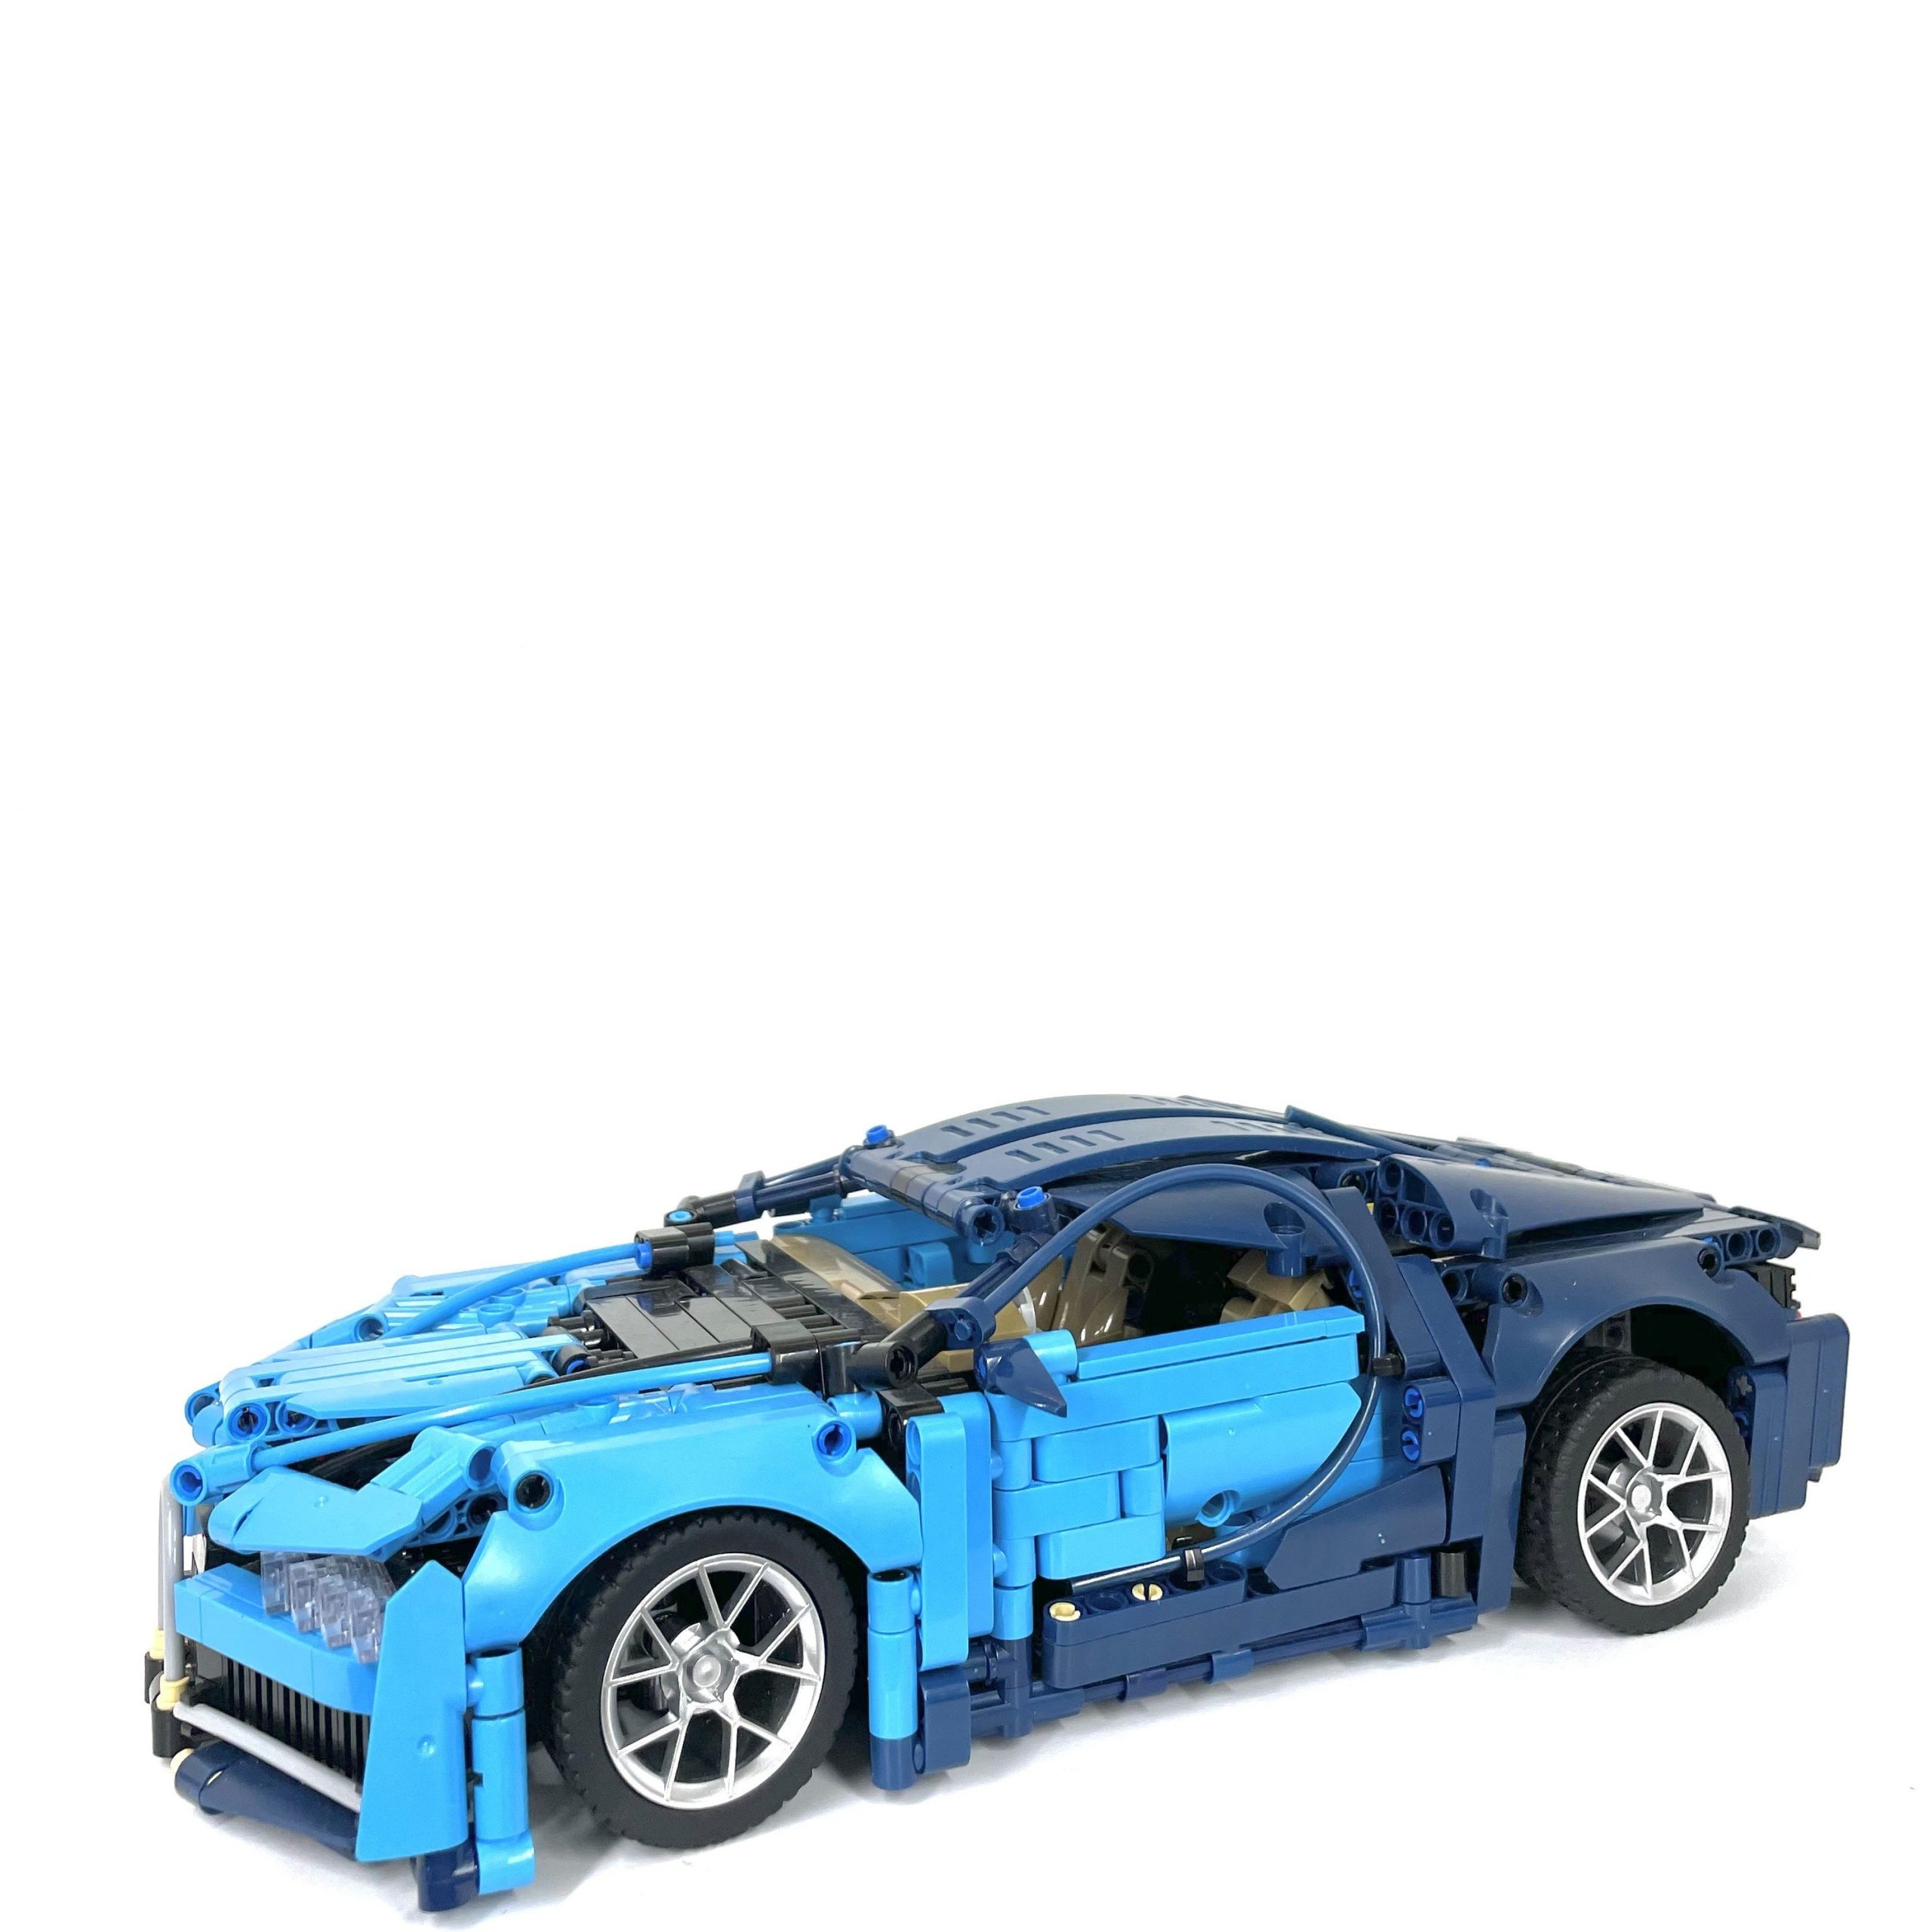 Mua Xe Mô Hình Bugatti Veyron Ledition Centenaire Autoart  70957 Đỏ   Tiki